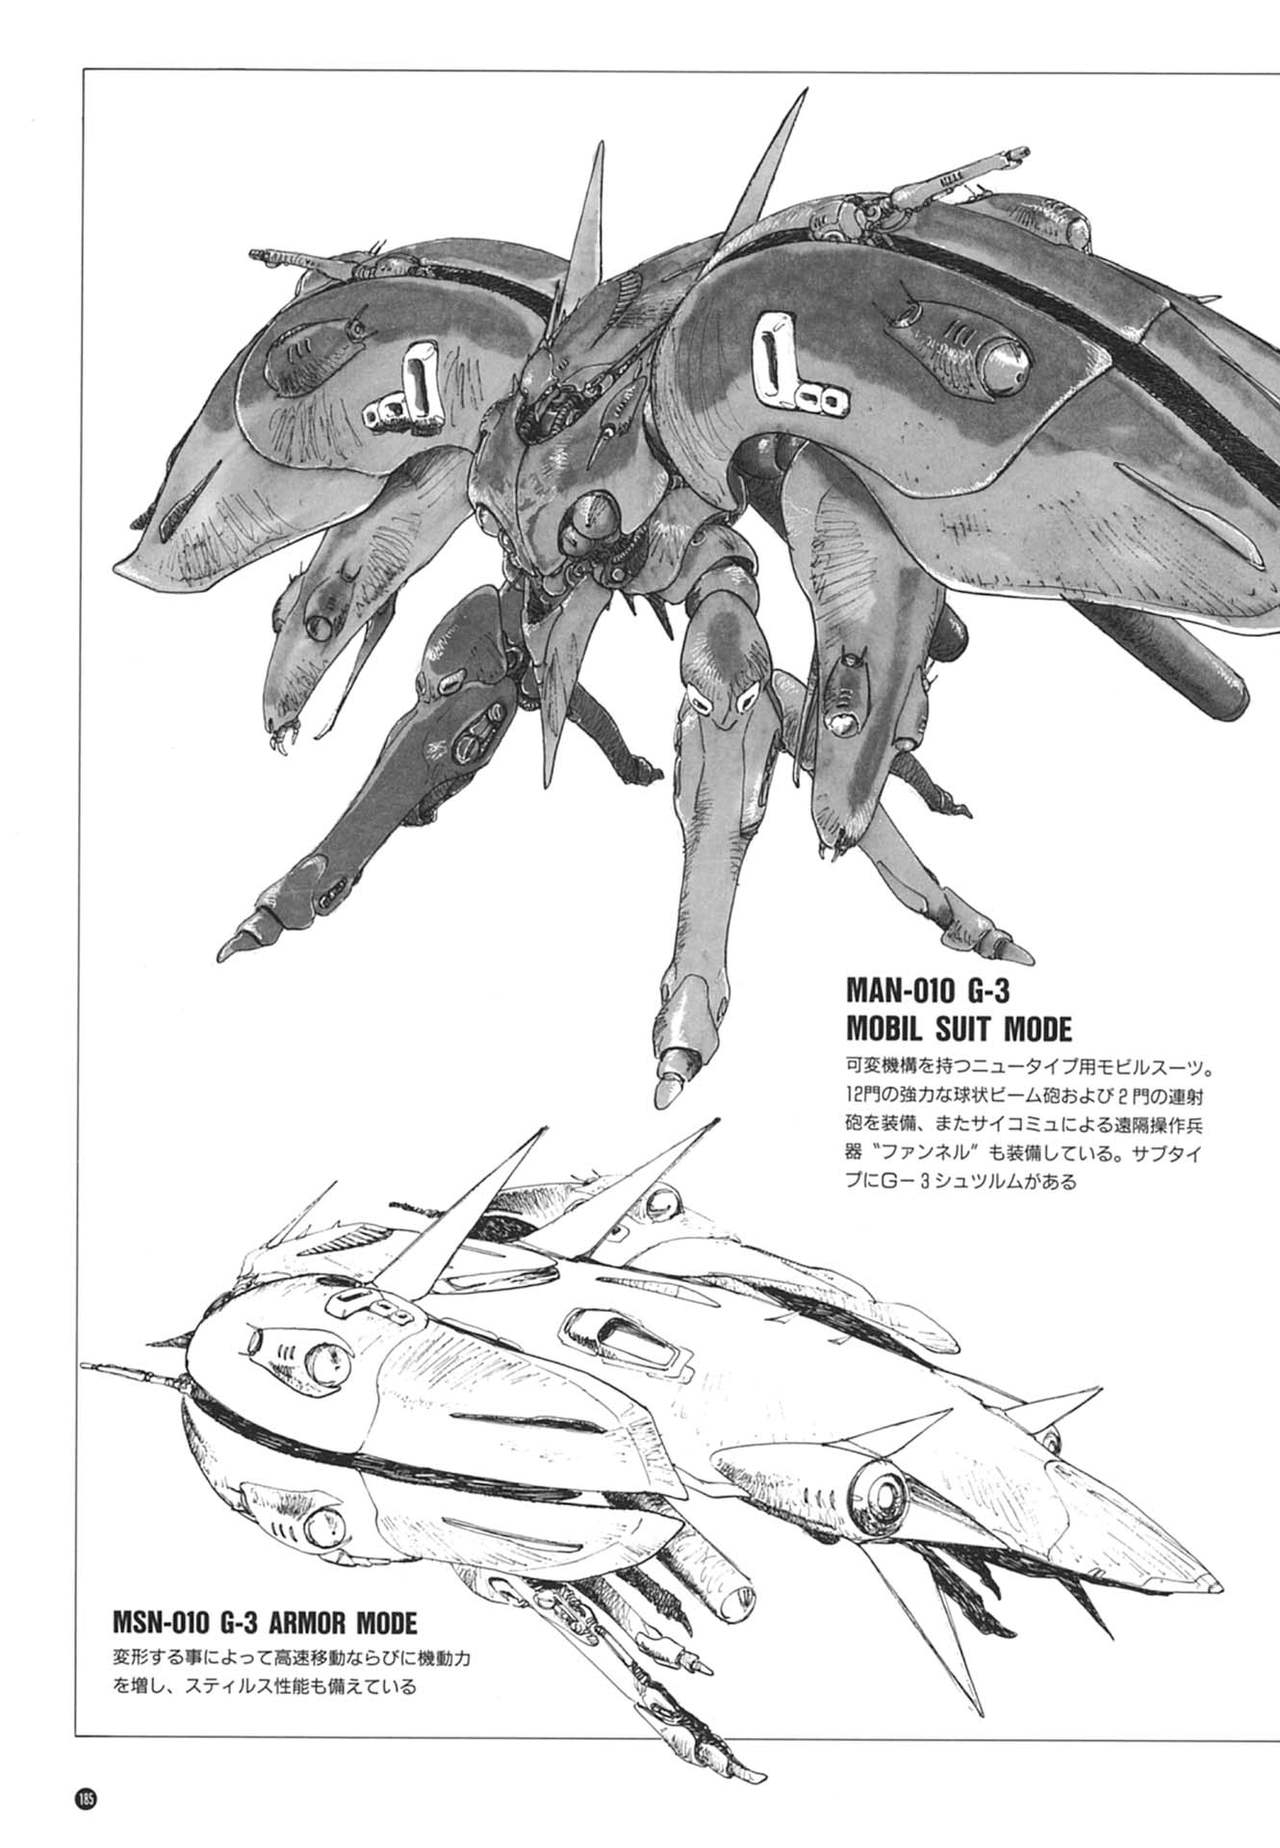 [Kazuhisa Kondo] Kazuhisa Kondo 2D & 3D Works - Go Ahead - From Mobile Suit Gundam to Original Mechanism 184